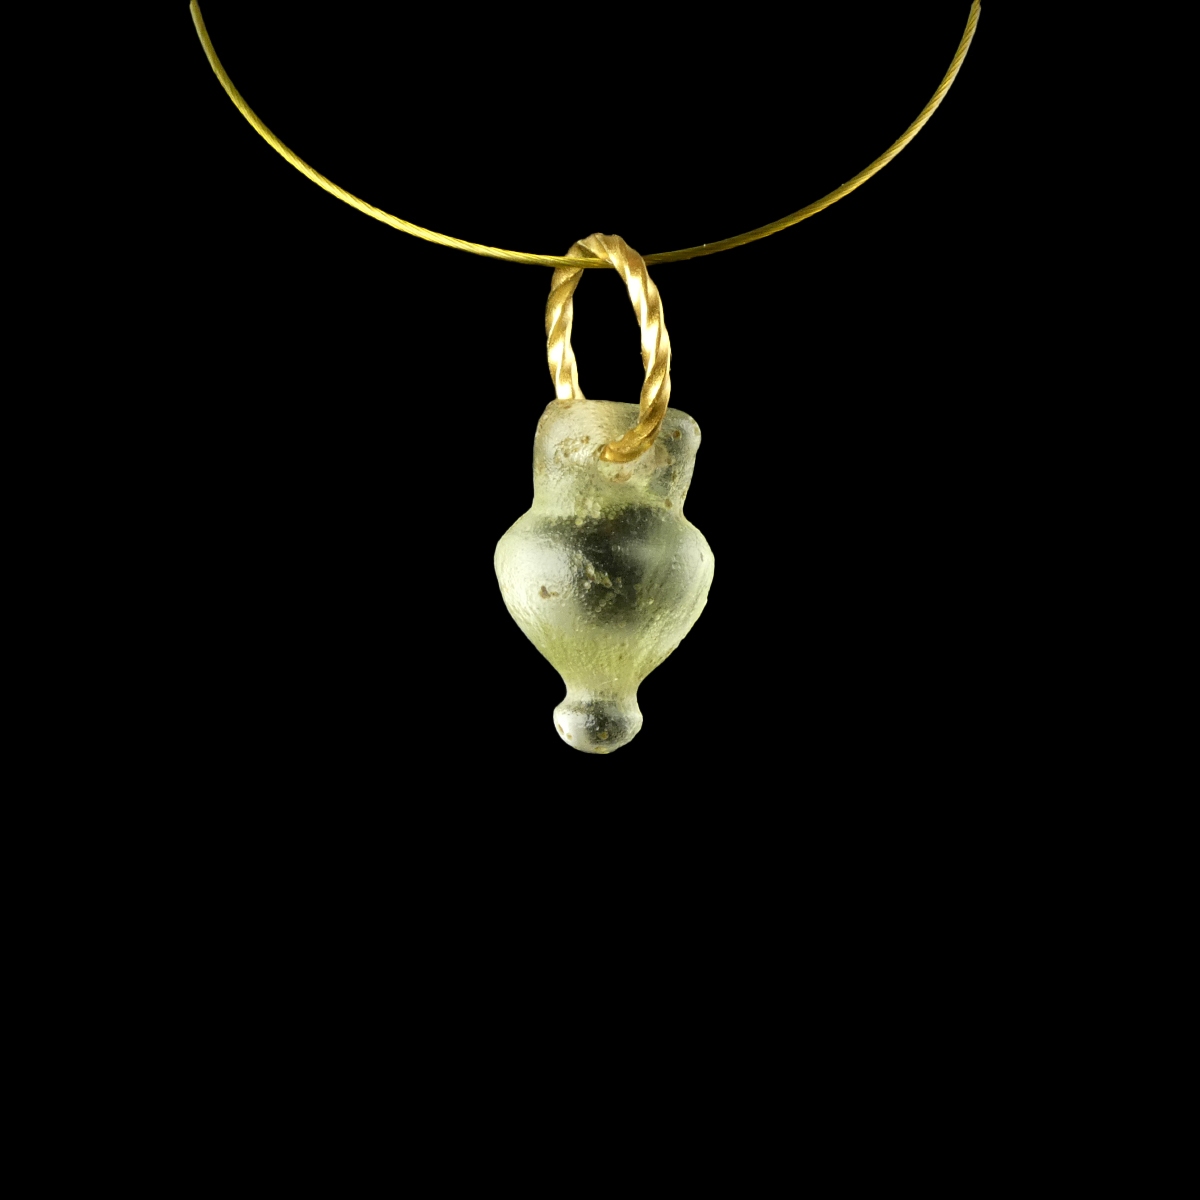 Roman glass Amphora jewellery pendant